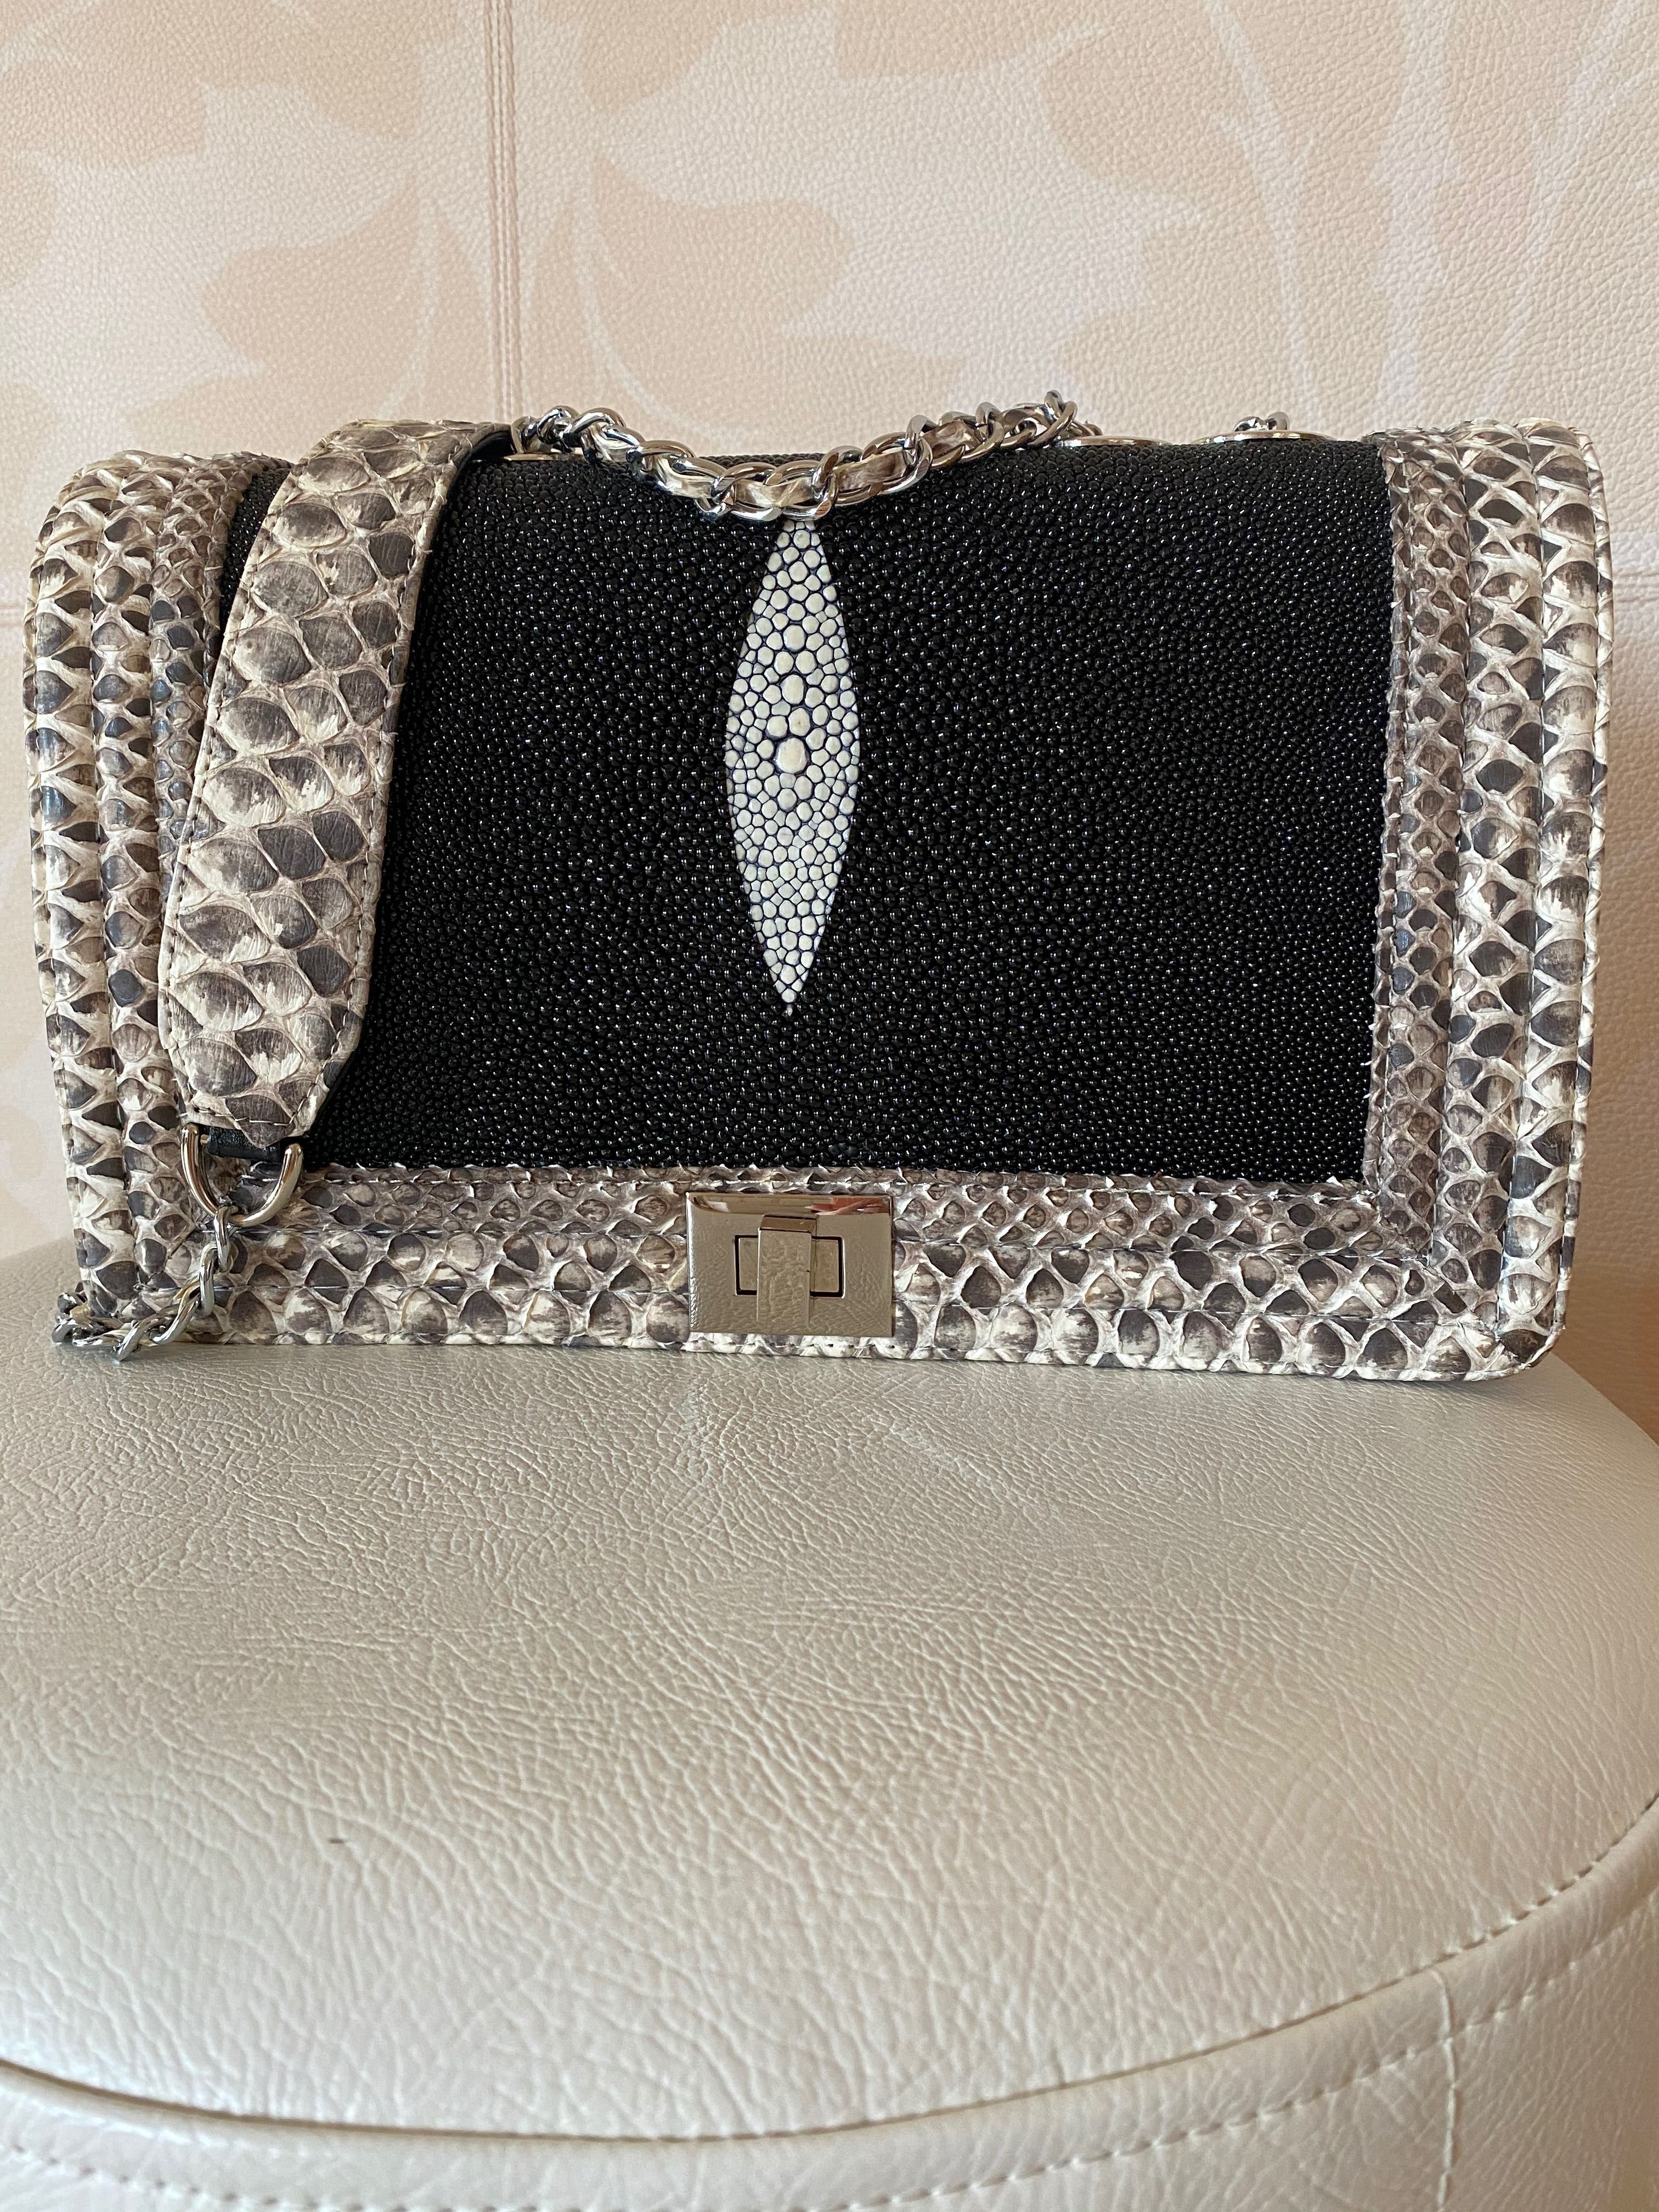 Елітна сумочка в стилі Chanel з екзотичної шкіри нова